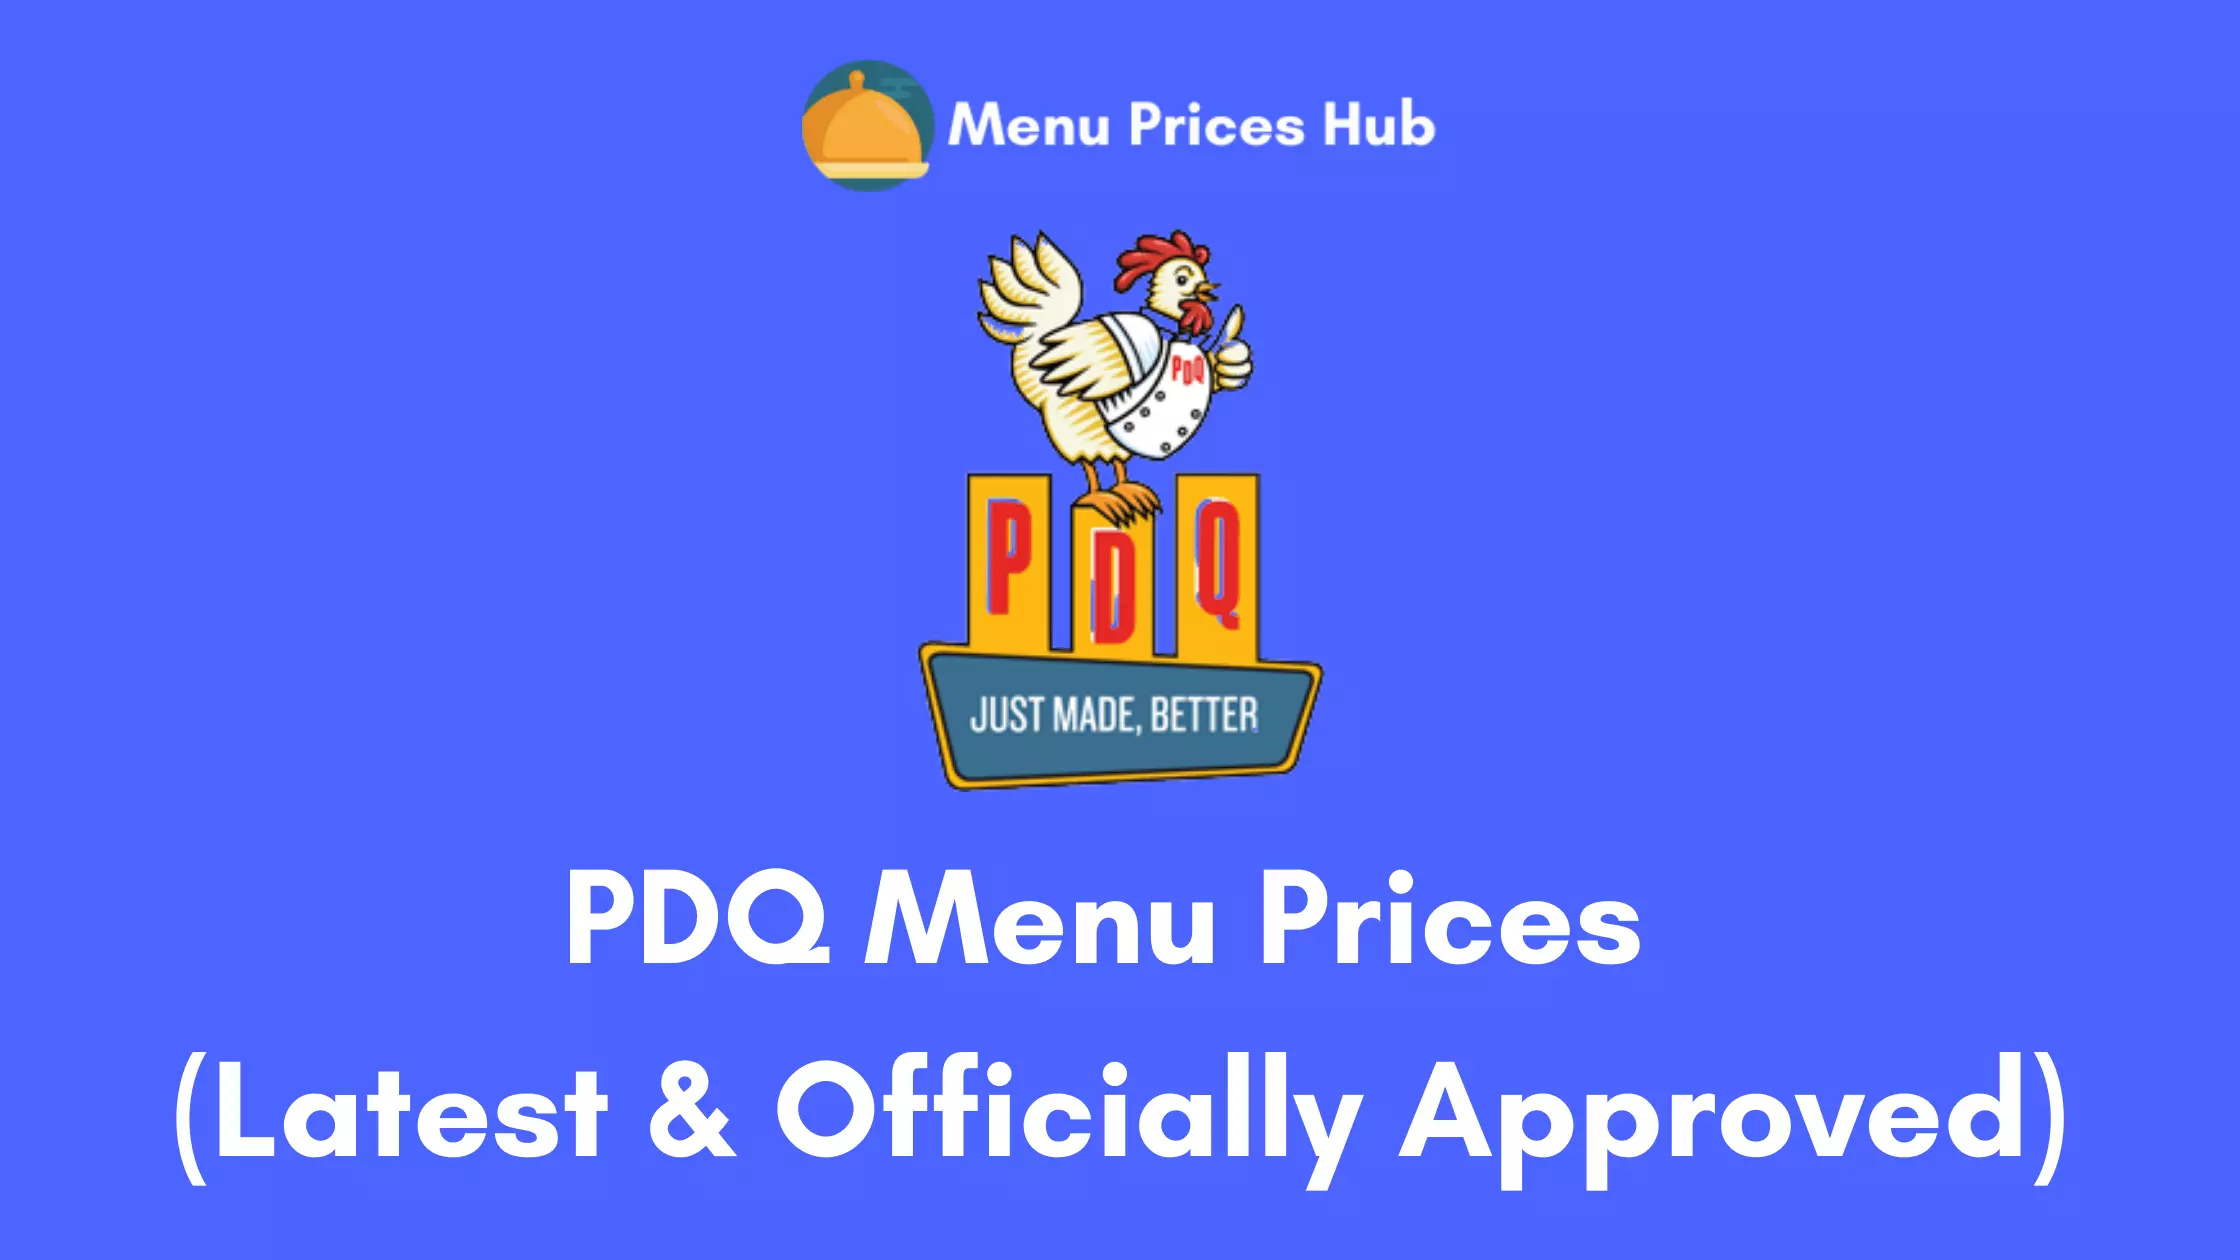 PDQ Menu Prices